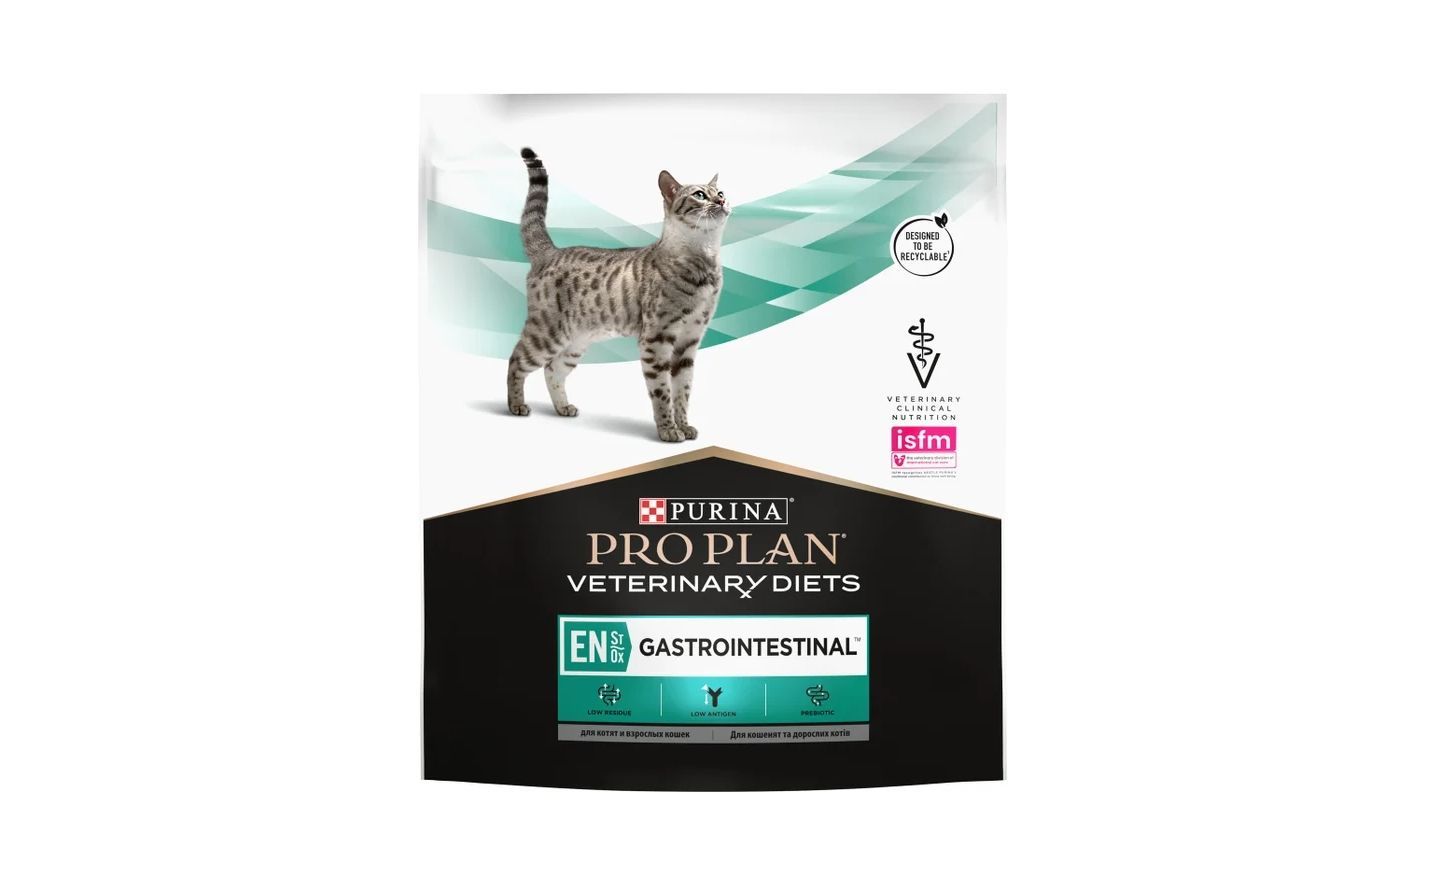 Сухой корм для кошек Pro Plan Veterinary Diets ha Hypoallergenic, гипоаллергенный, 1,3кг. Корм Проплан гастро Интестинал для кошек. Pro Plan® Veterinary Diets en St/Ox Gastrointestinal. Purina Gastrointestinal для кошек.